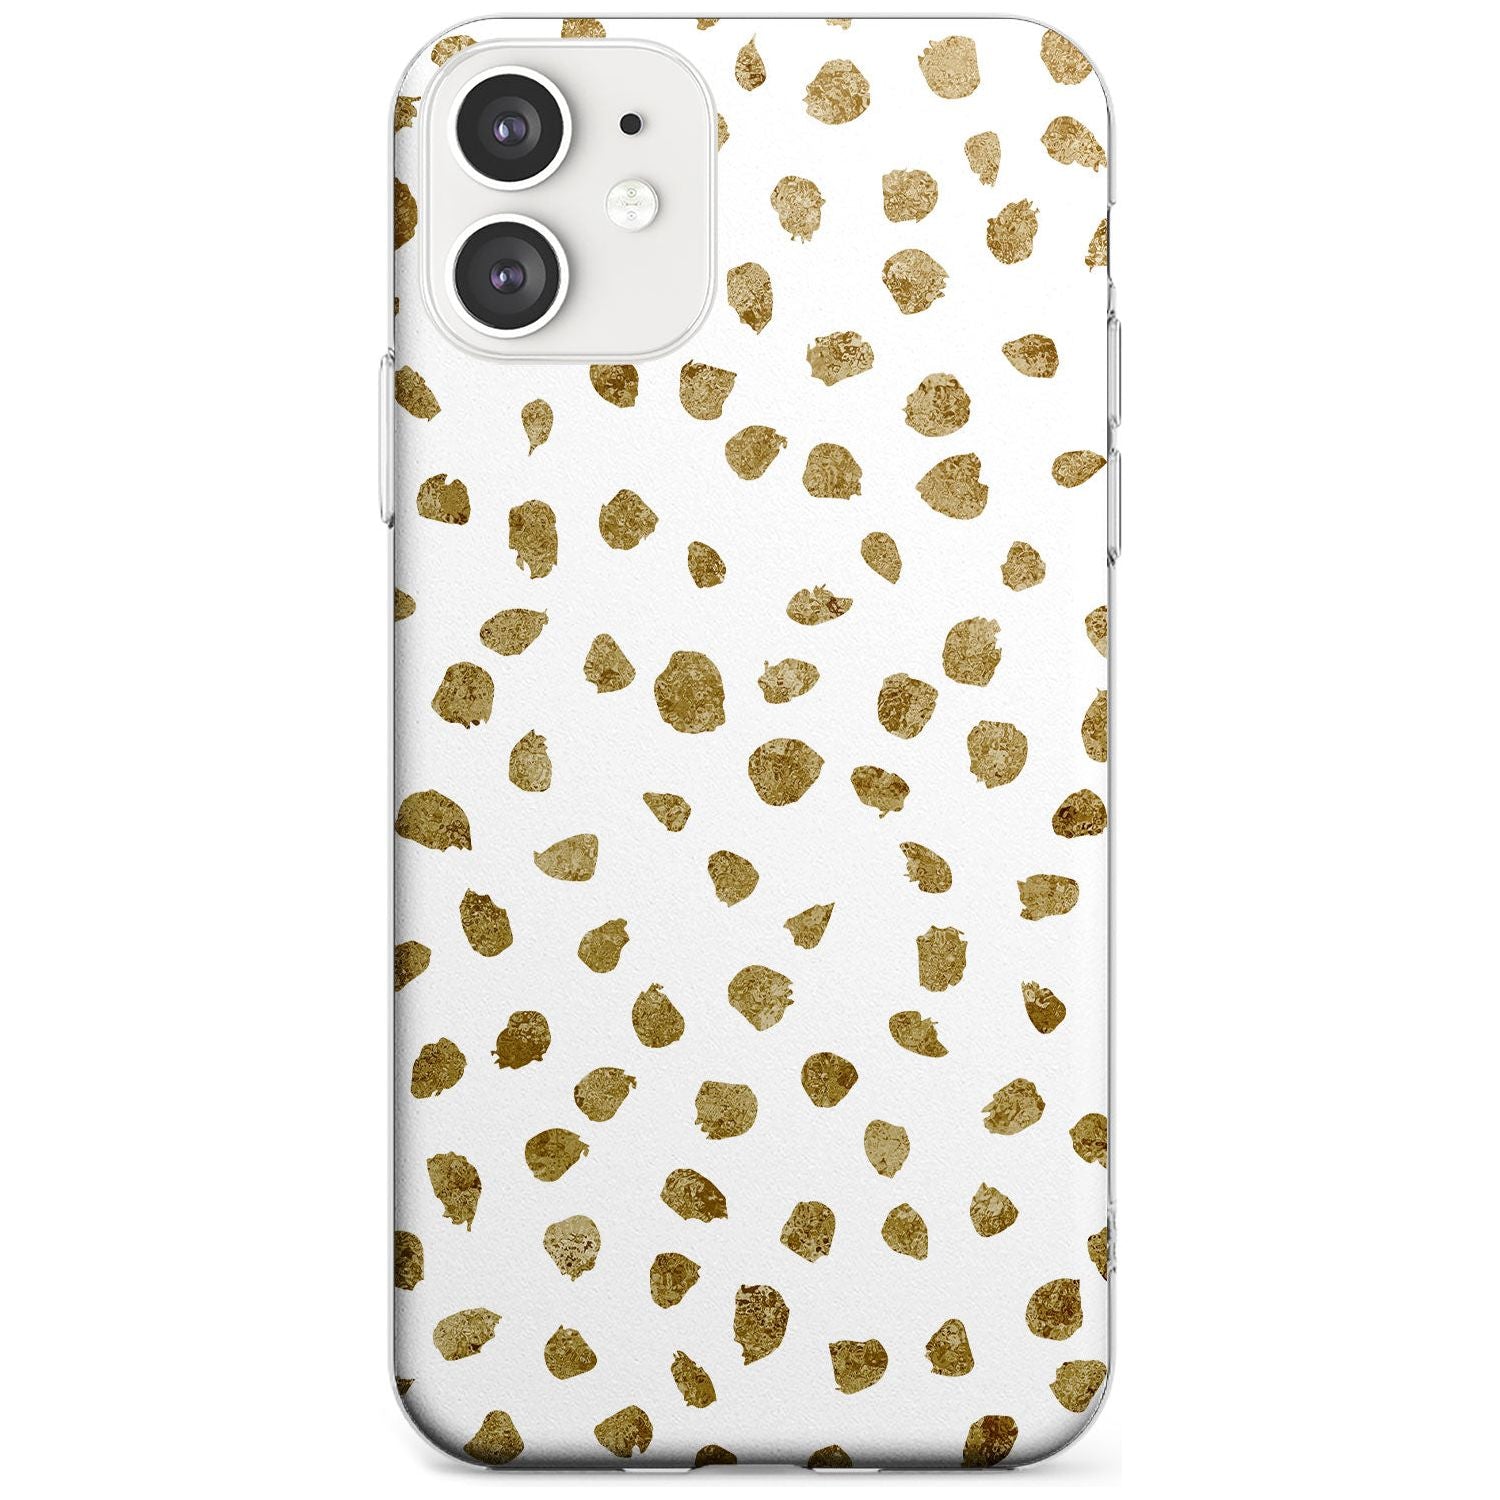 Gold Look on White Dalmatian Polka Dot Spots Slim TPU Phone Case for iPhone 11